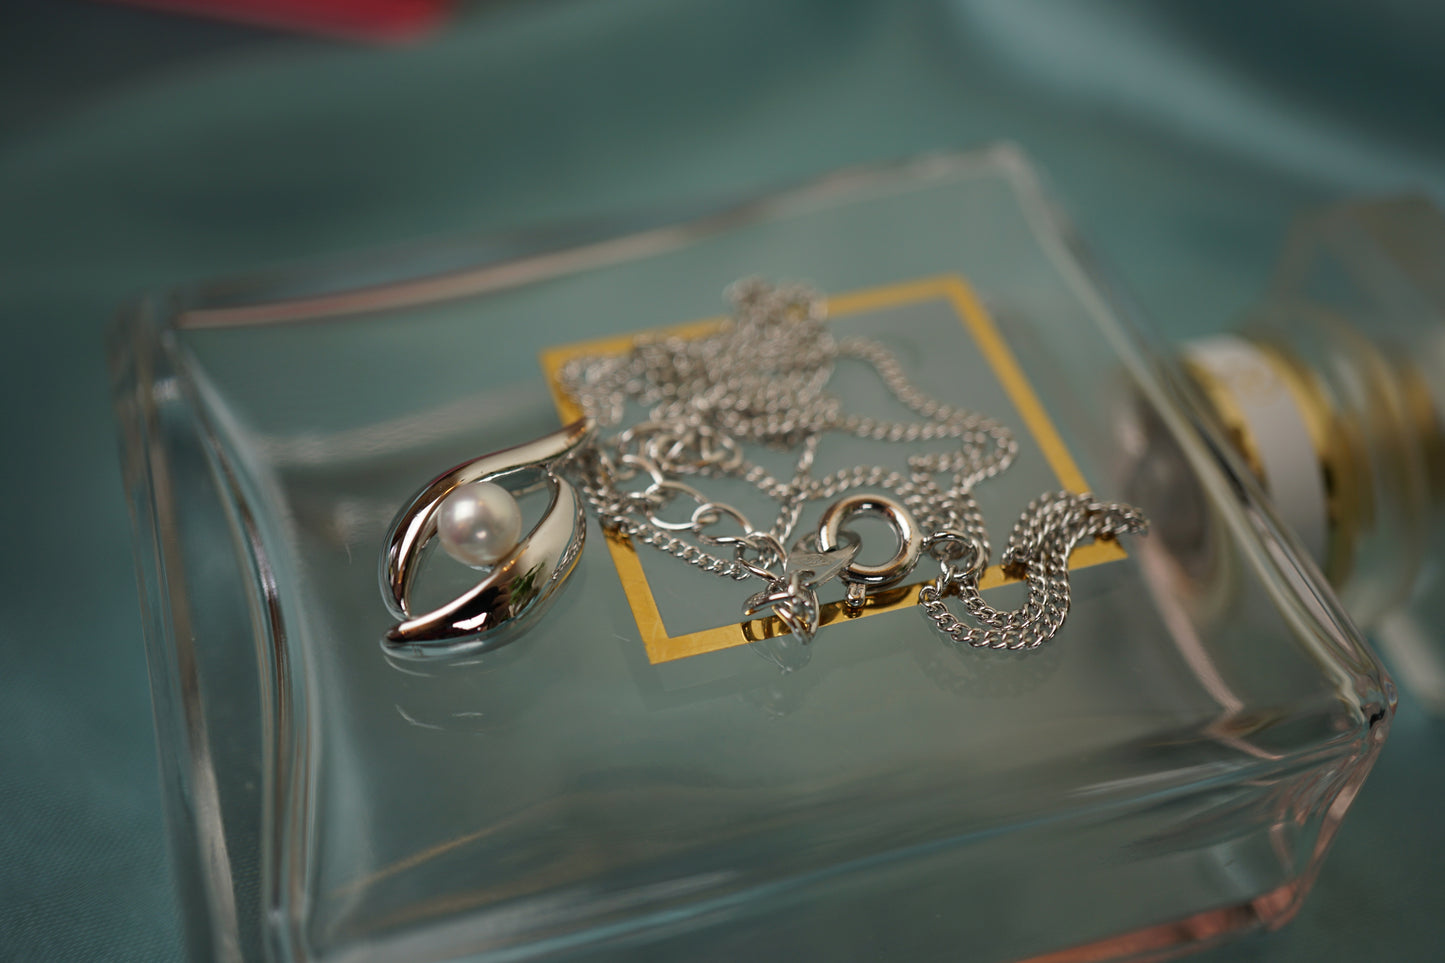 Tasaki Akoya Pearl 5mm Silver Necklace